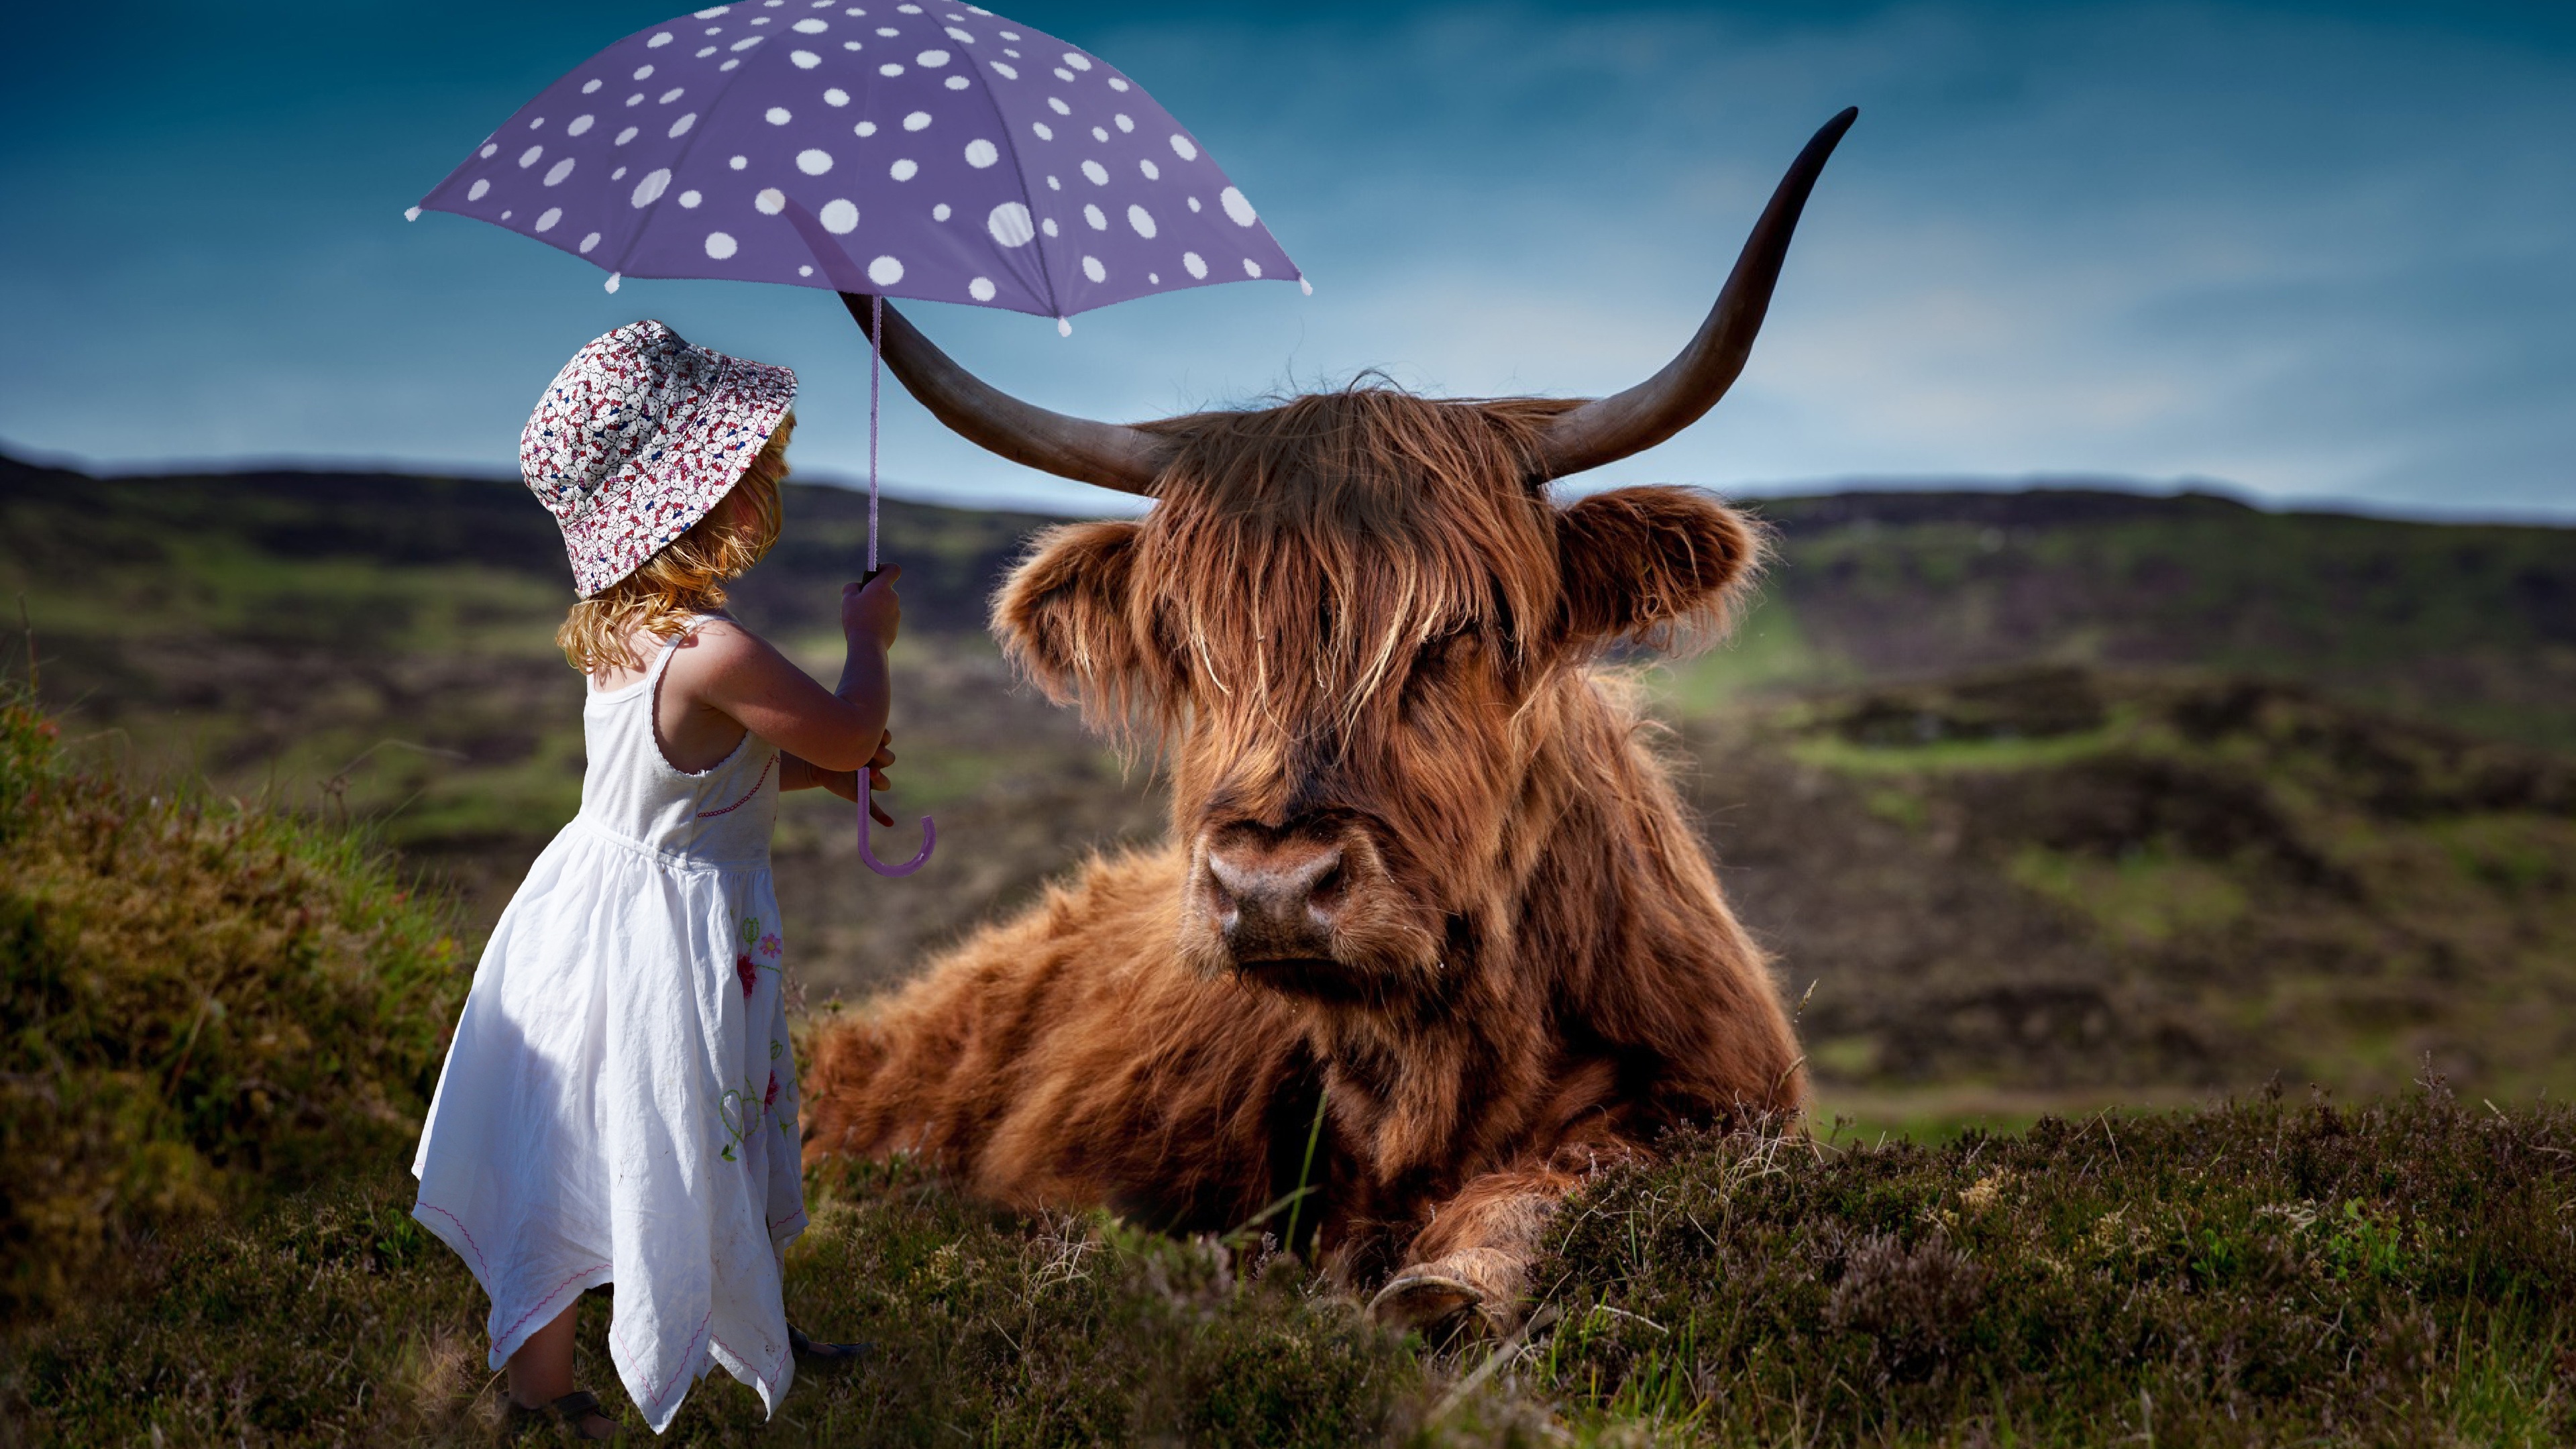 child-cow-umbrella-5k-6d.jpg